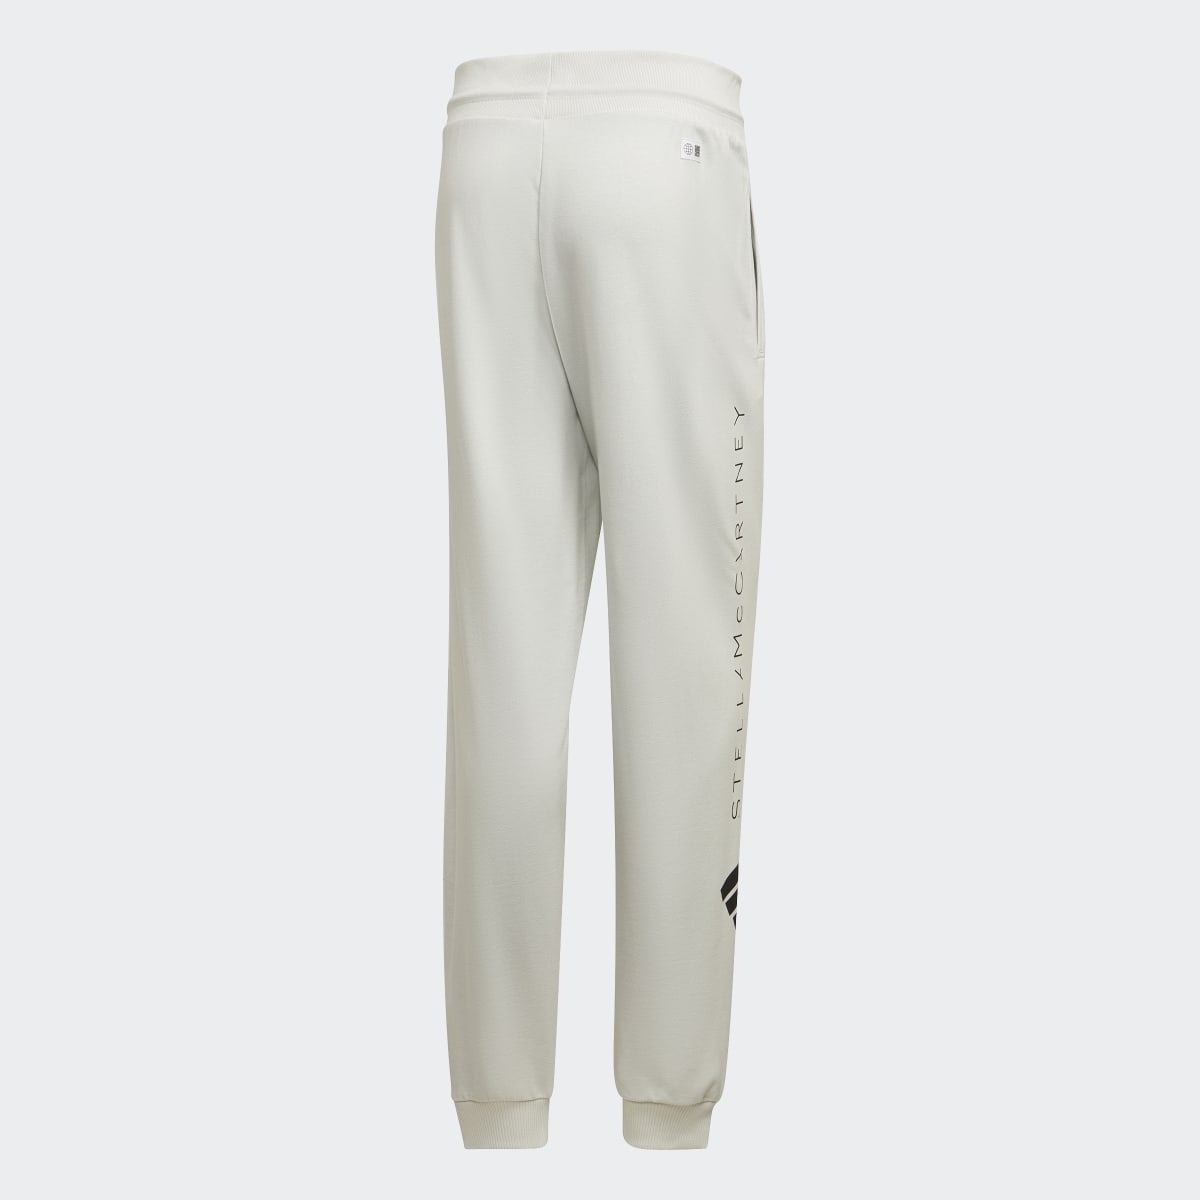 Adidas by Stella McCartney Sportswear Regenerated Cellulose Hose – Genderneutral. 7